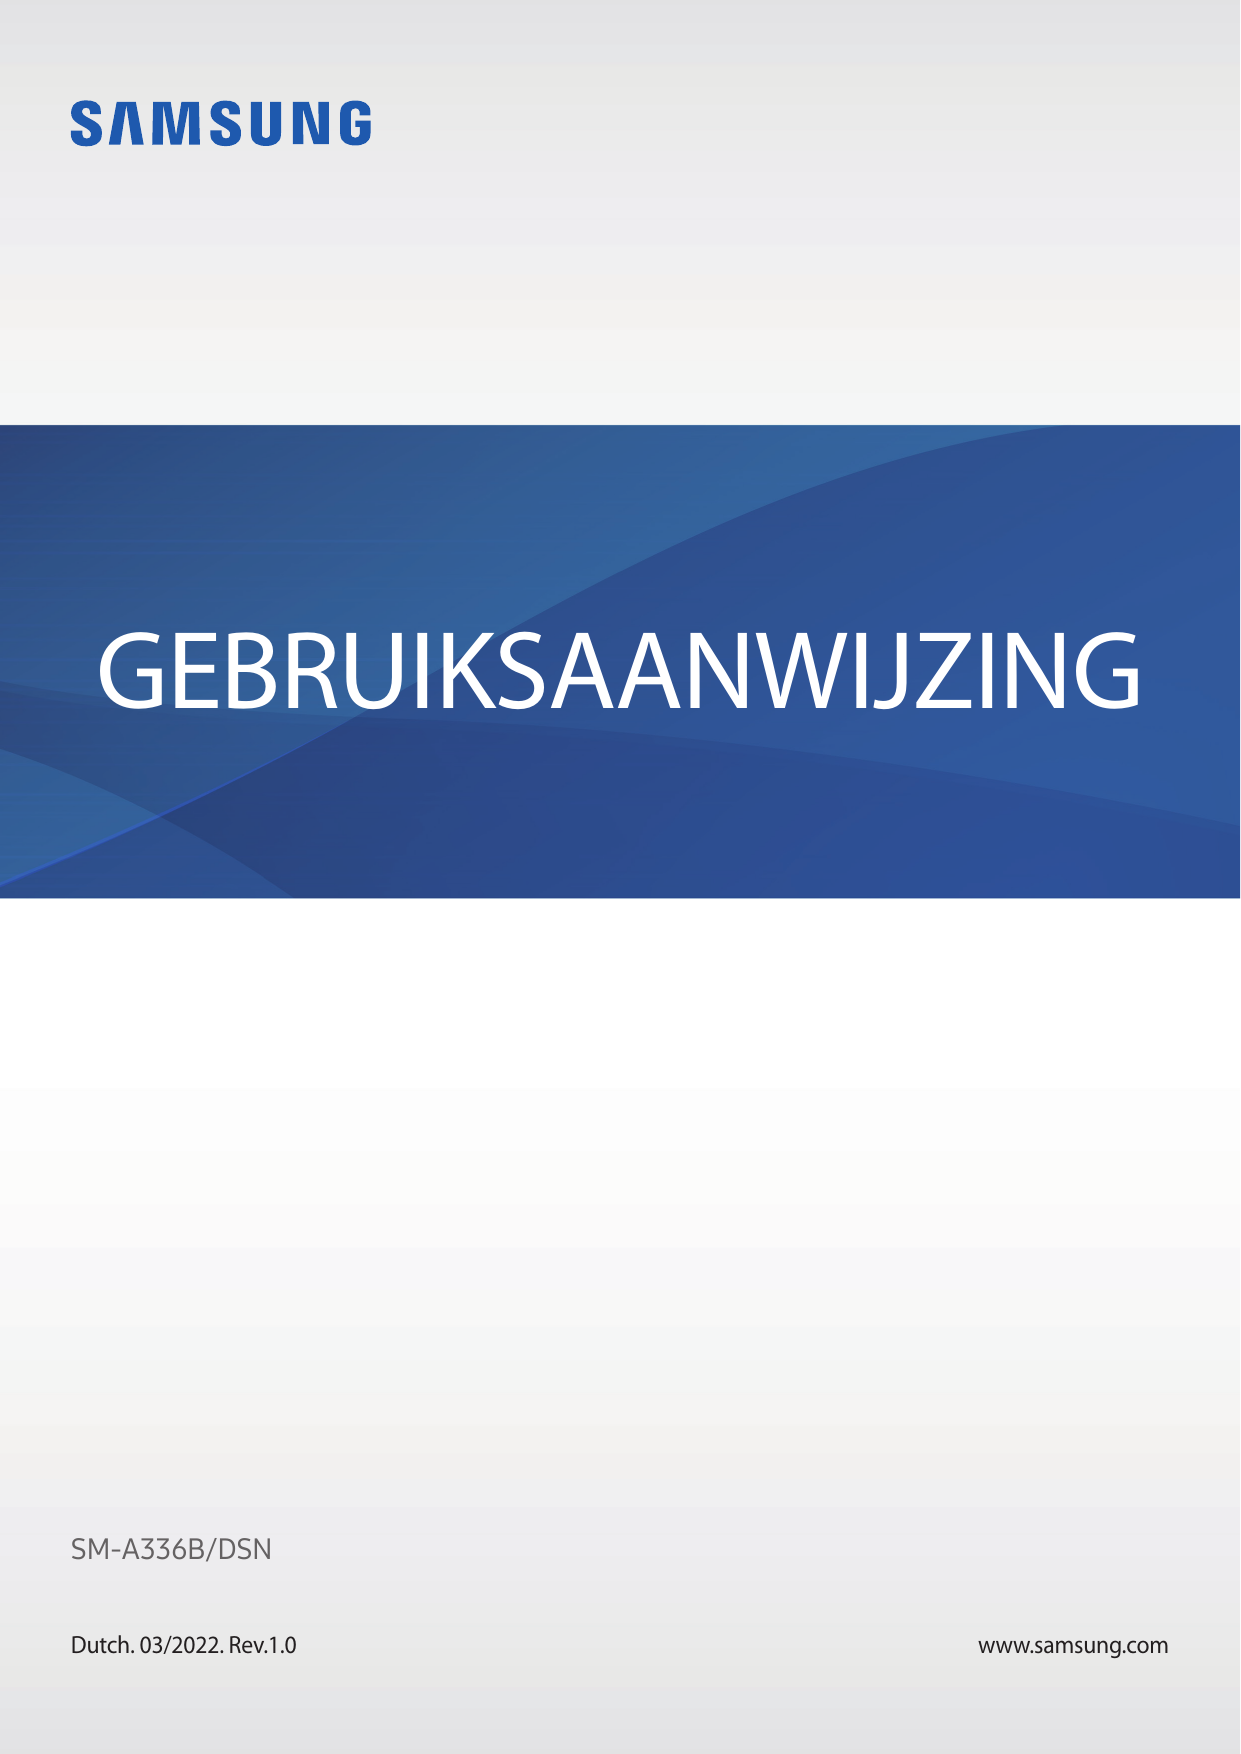 GEBRUIKSAANWIJZINGSM-A336B/DSNDutch. 03/2022. Rev.1.0www.samsung.com